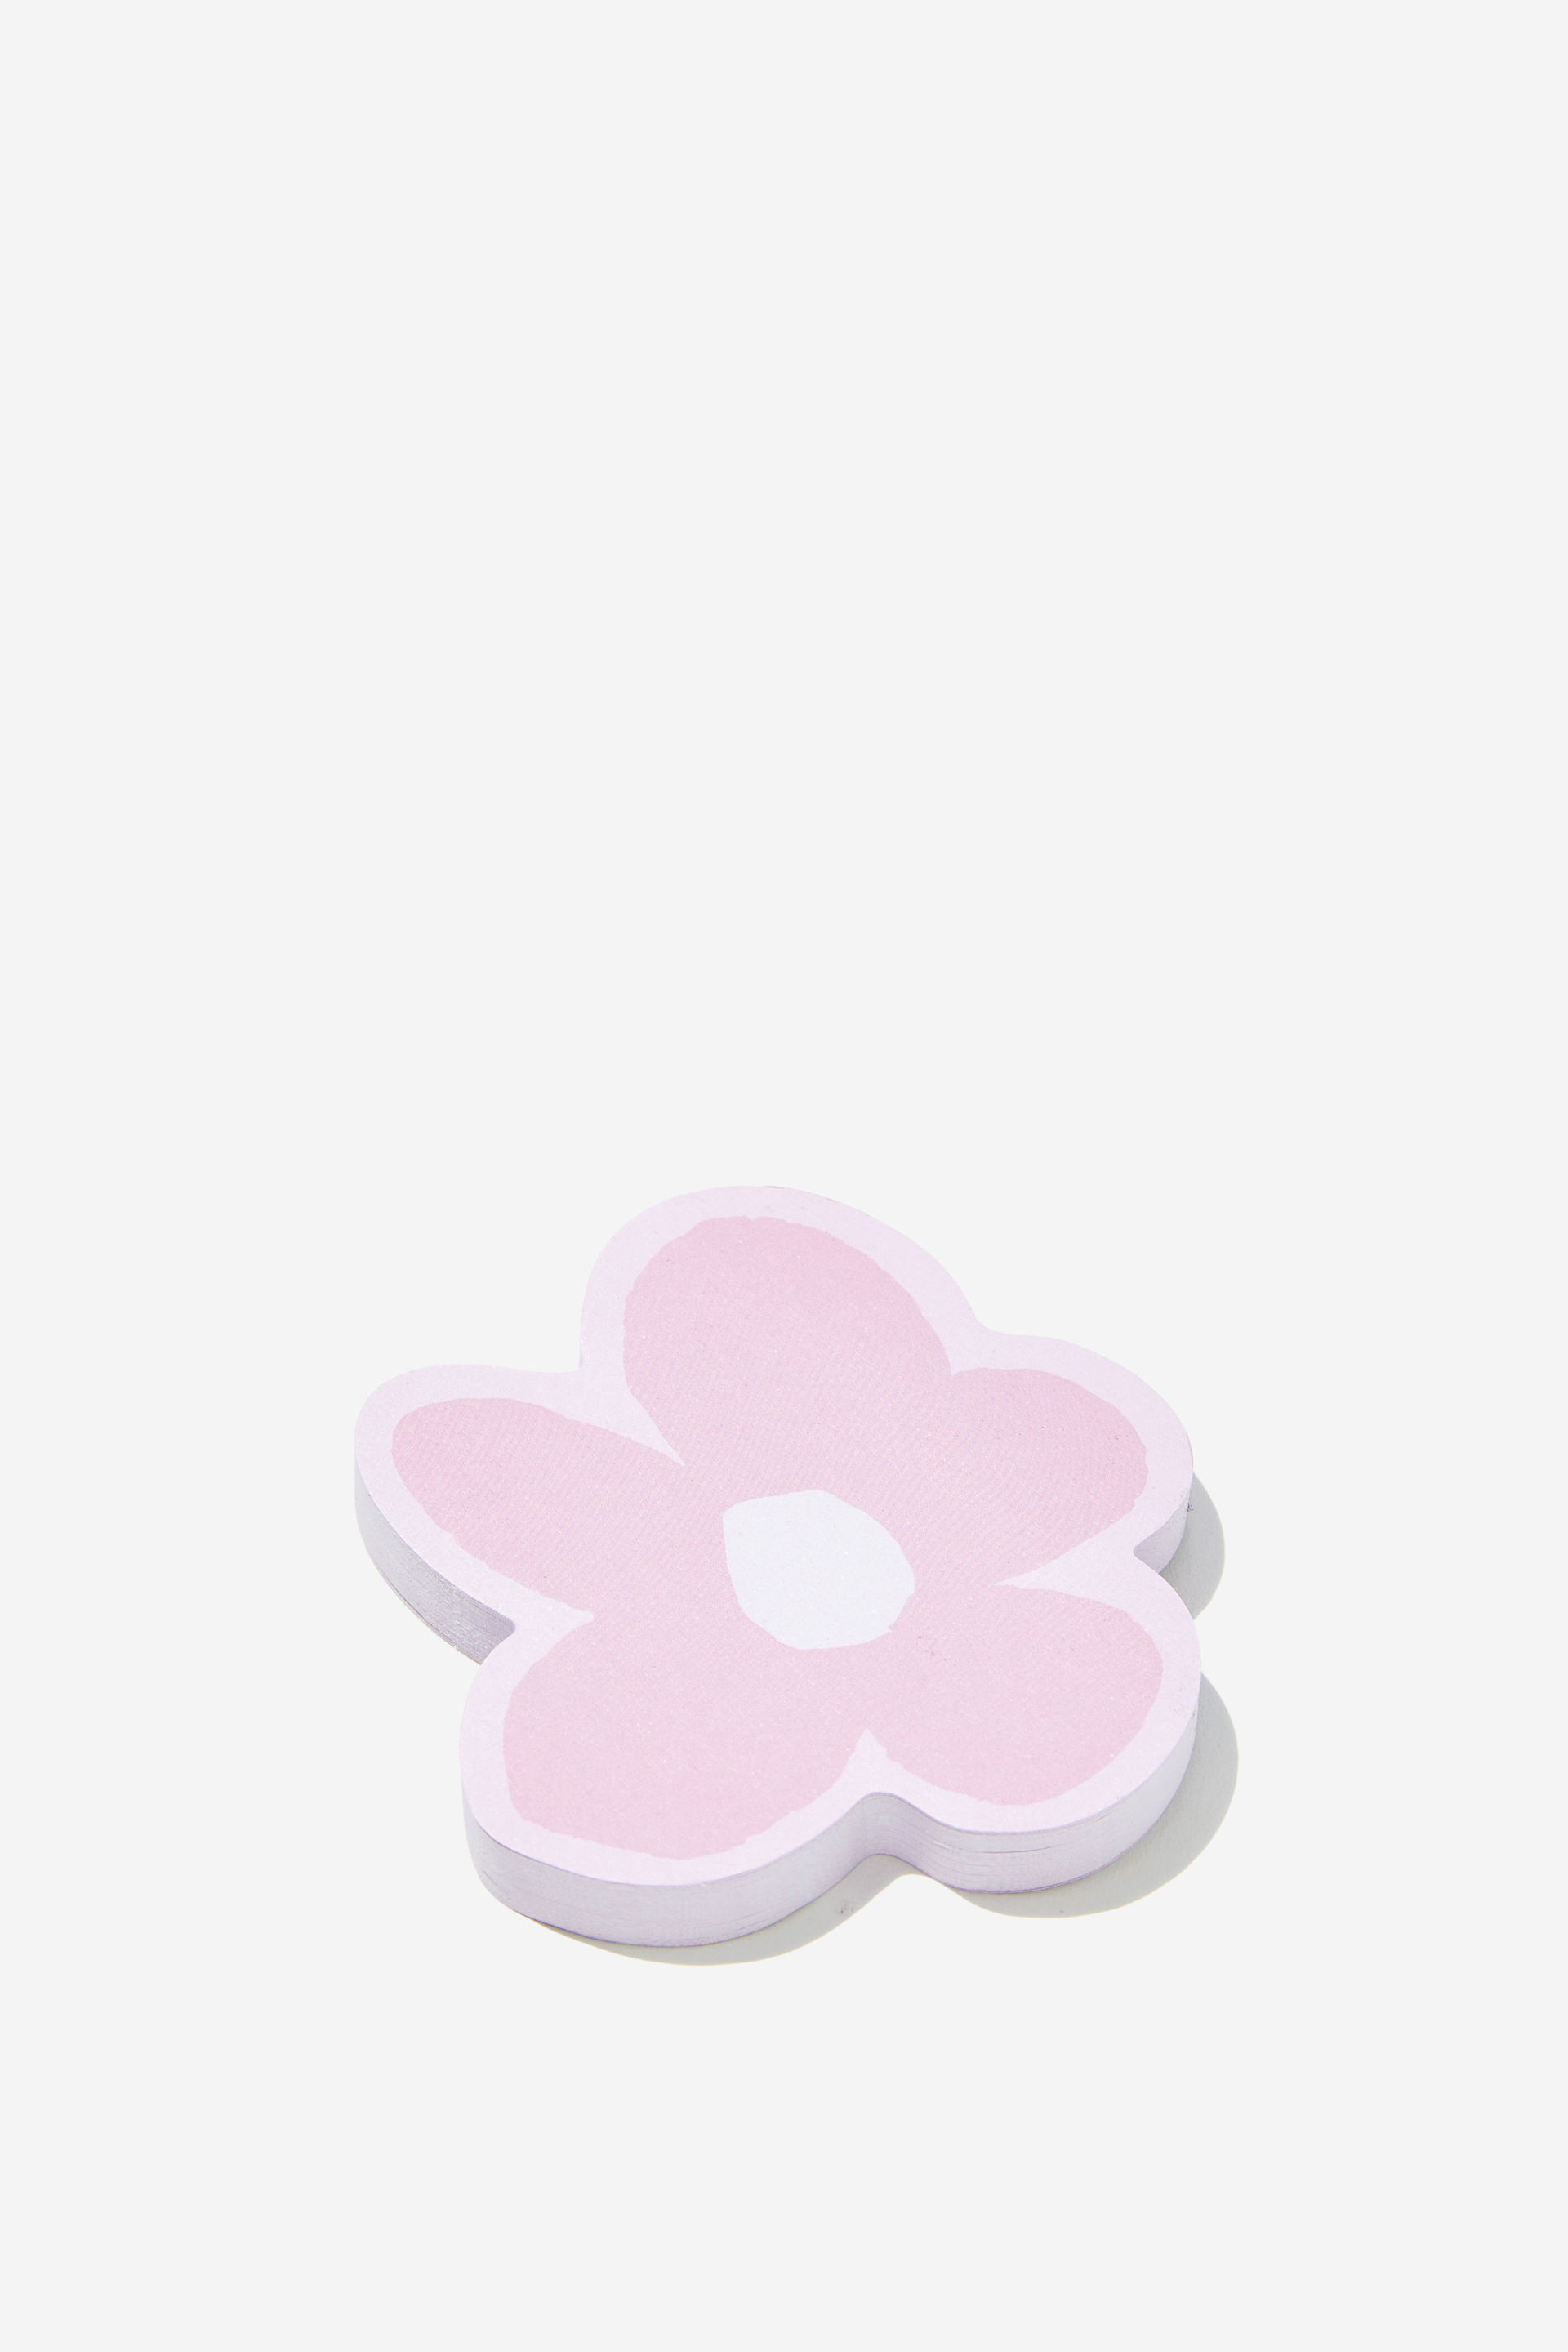 Typo - Shaped Sticky Notes - Flower ballet blush